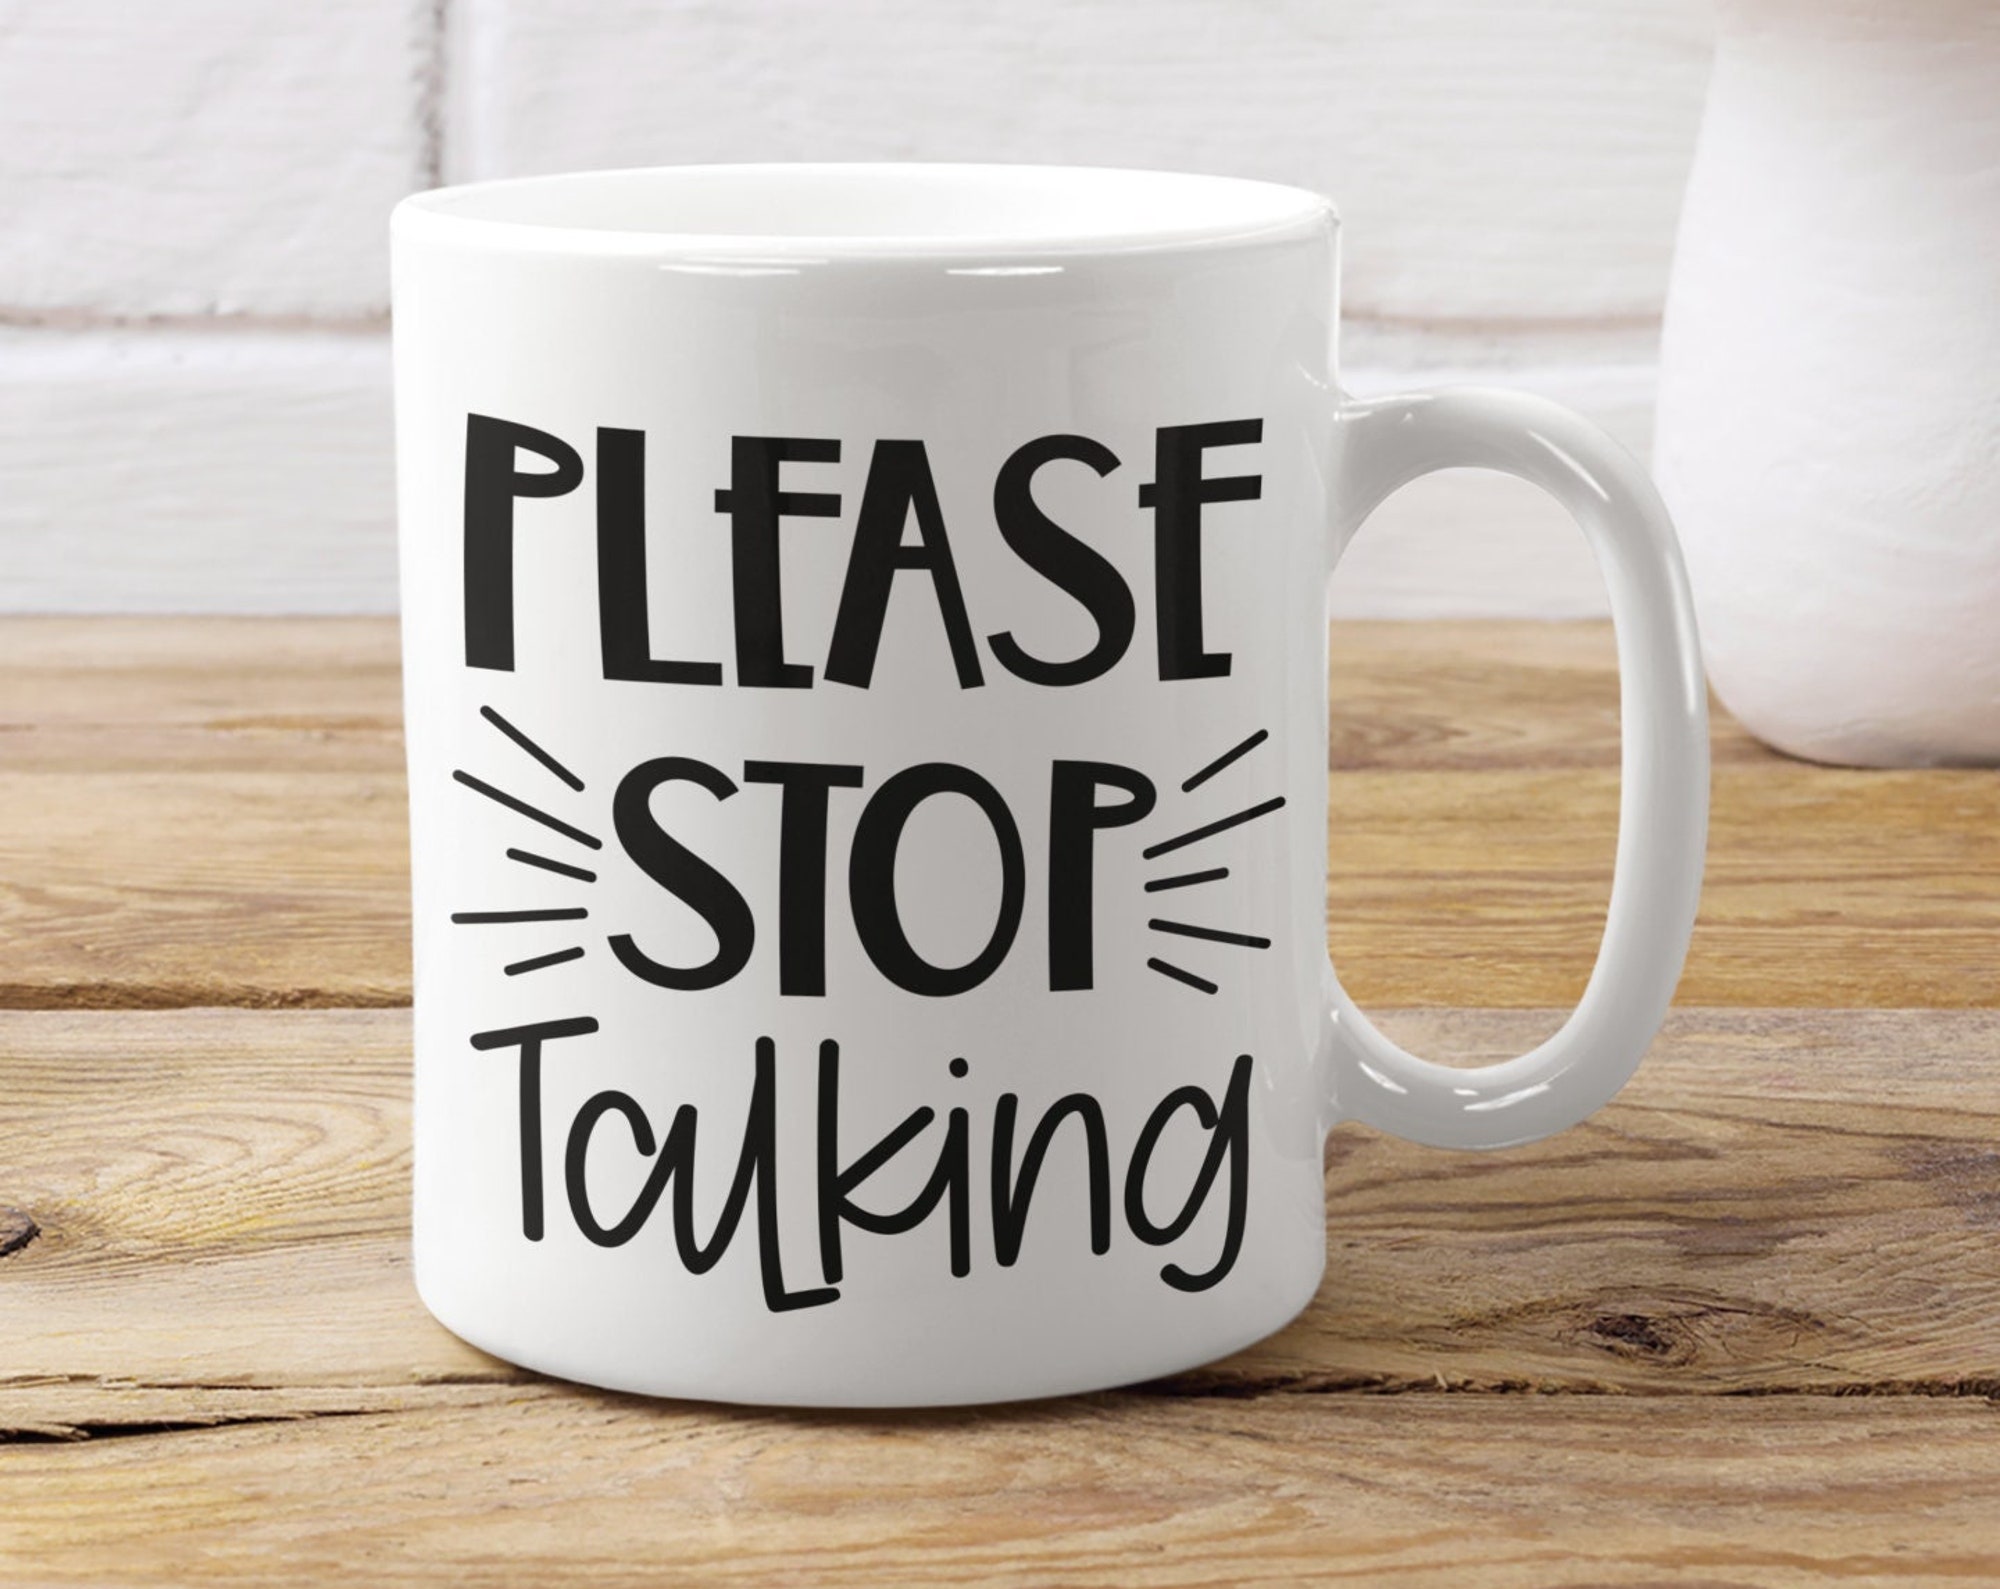 Discover Please Stop talking sarcastic mug